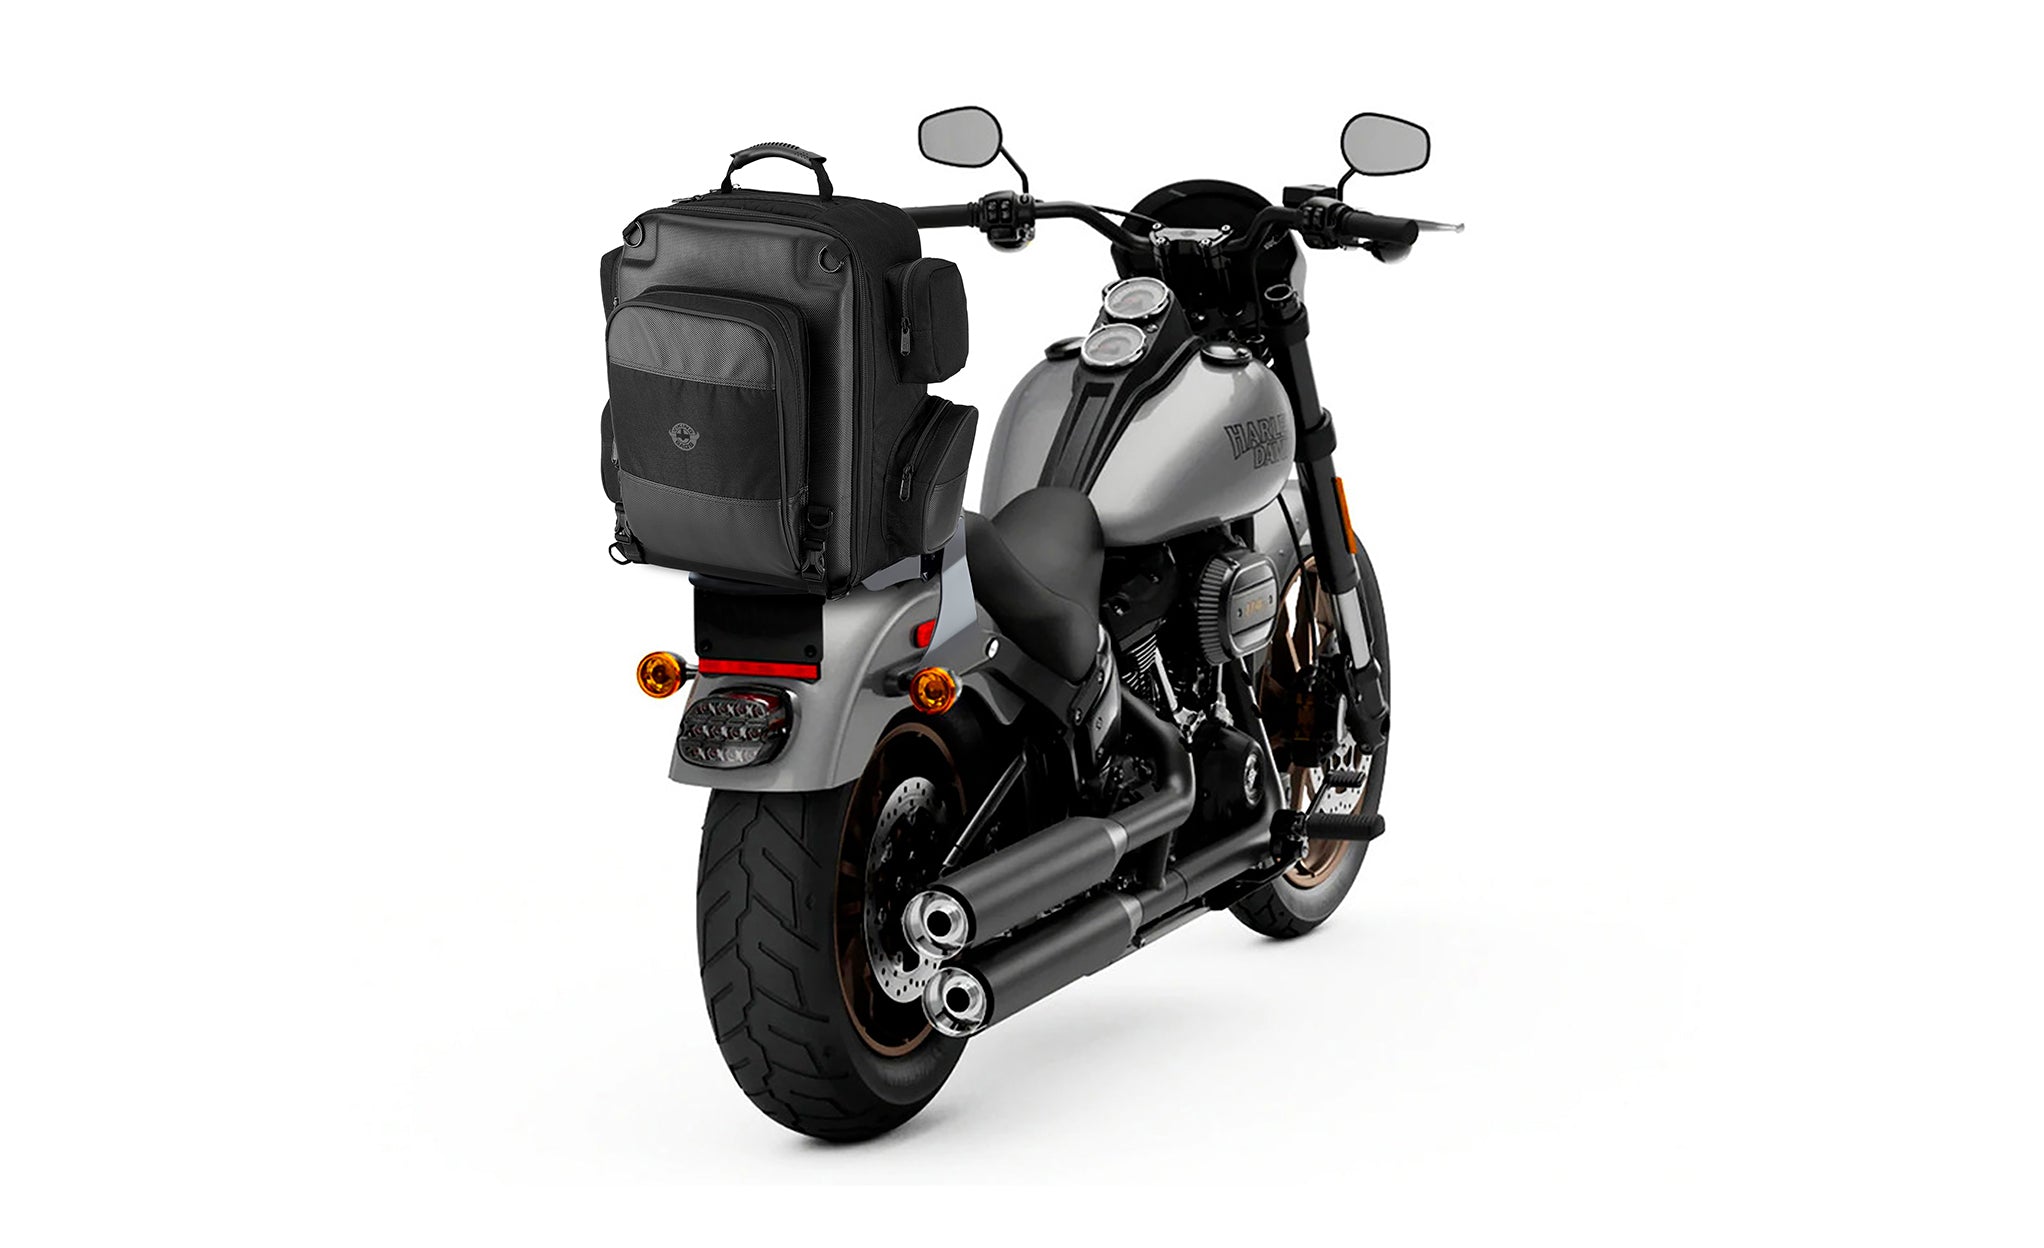 Viking Voyage Large Motorcycle Backpack for Harley Davidson Bag on Bike View @expand